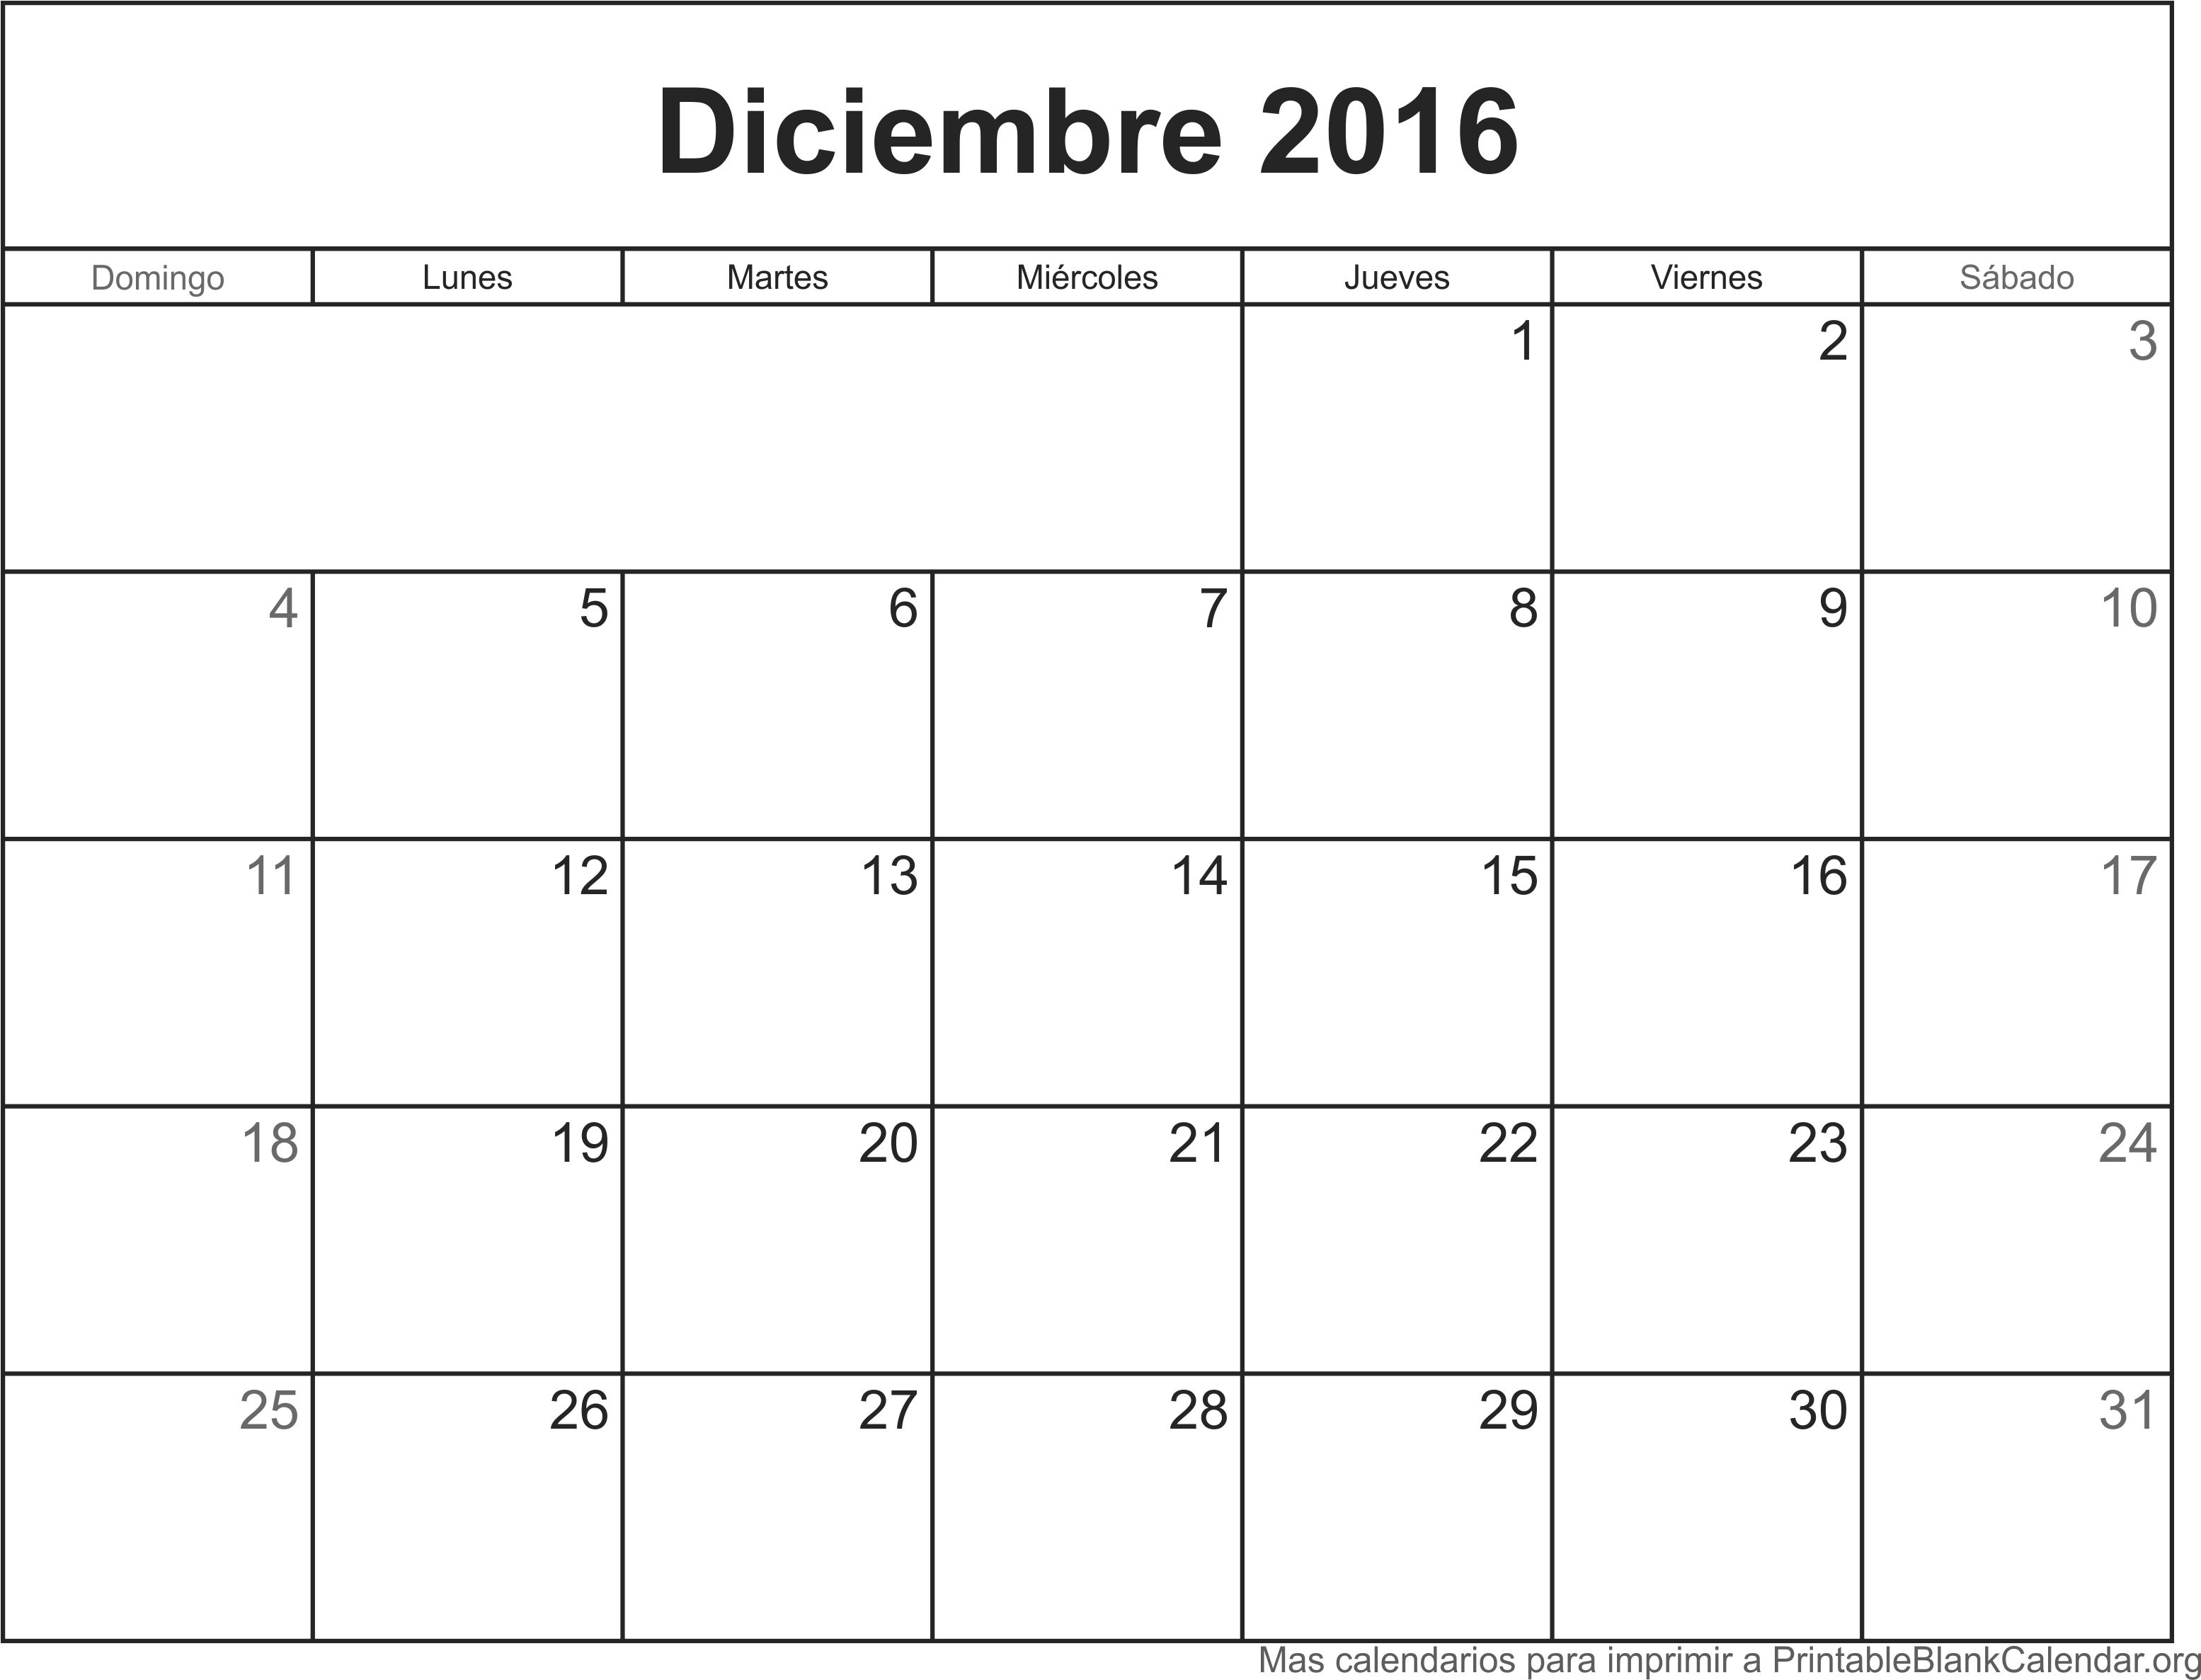 deciembre 2016 agenda